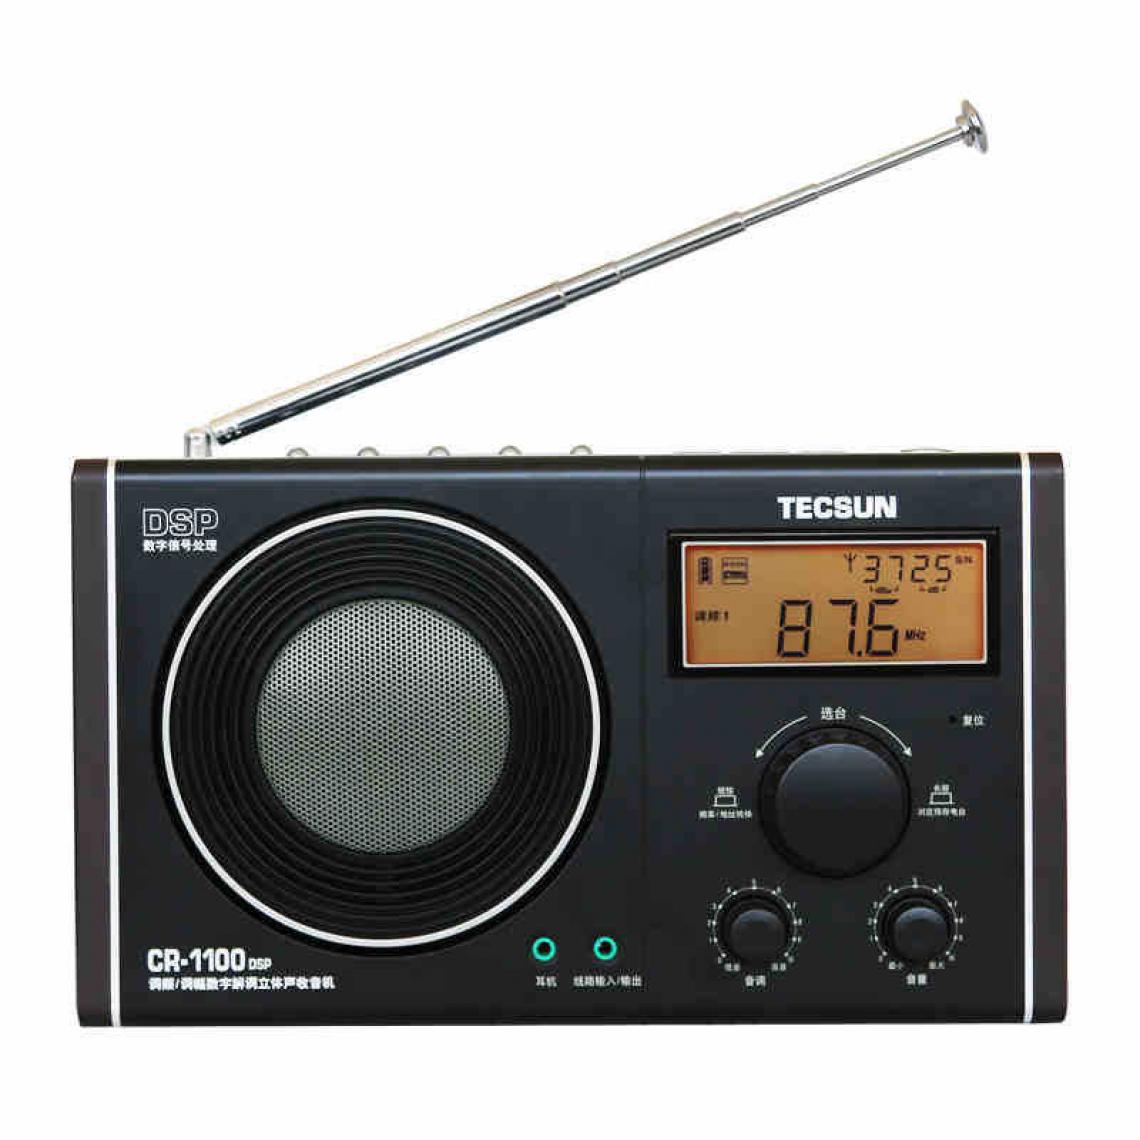 Universal - Cr 1100 DSP AM/FM radio stéréo radio FM portable rétro 87108 MHz/65108 MHz/5221620 kHz AM/FM radio stéréo |(Le noir) - Radio